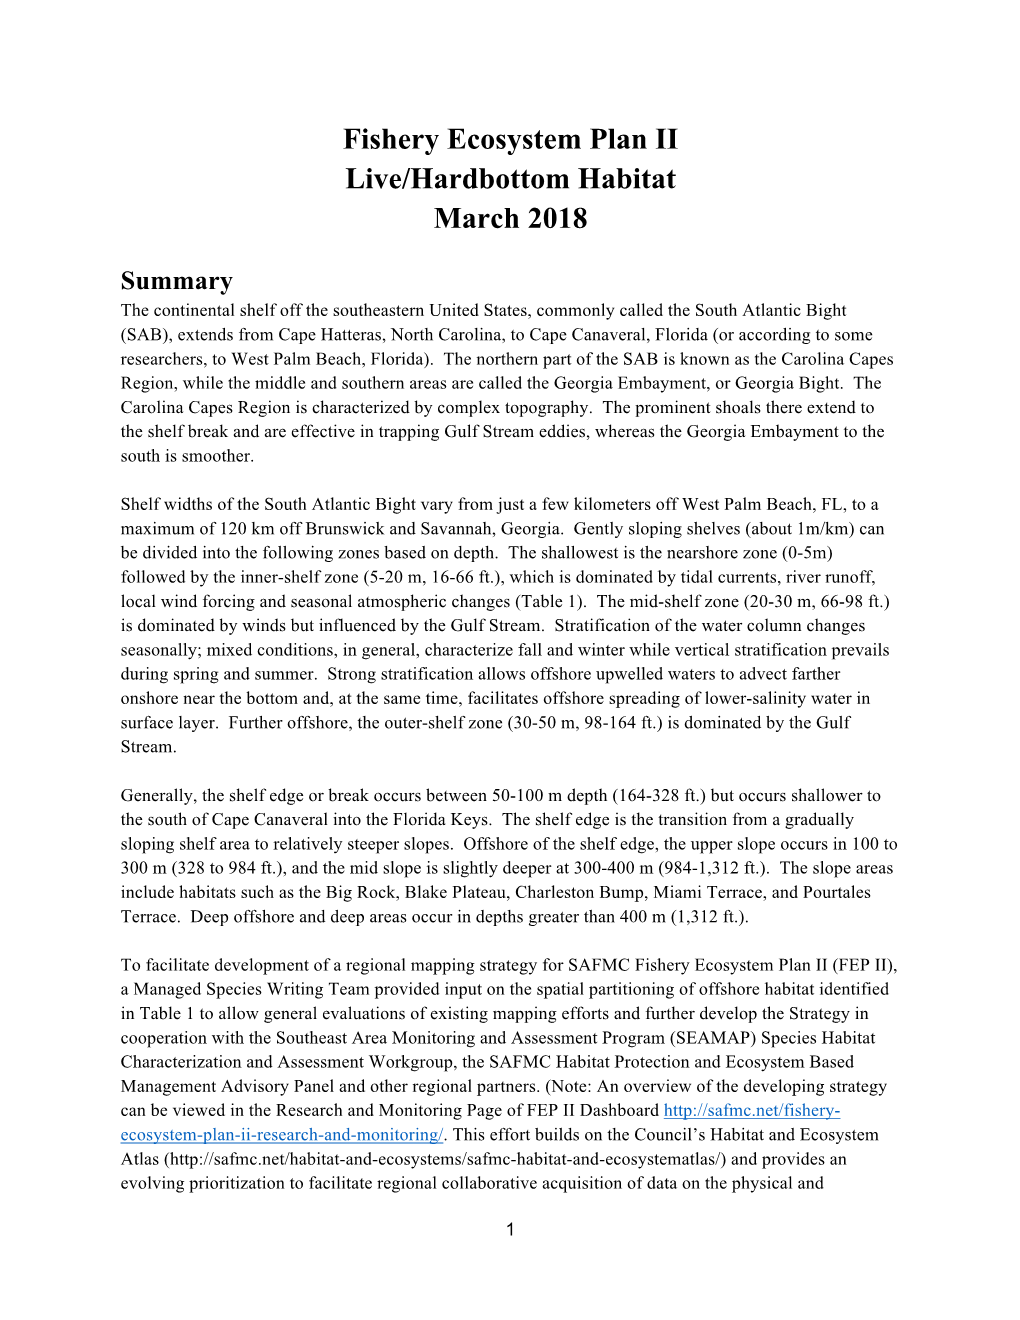 Fishery Ecosystem Plan II Live/Hardbottom Habitat March 2018